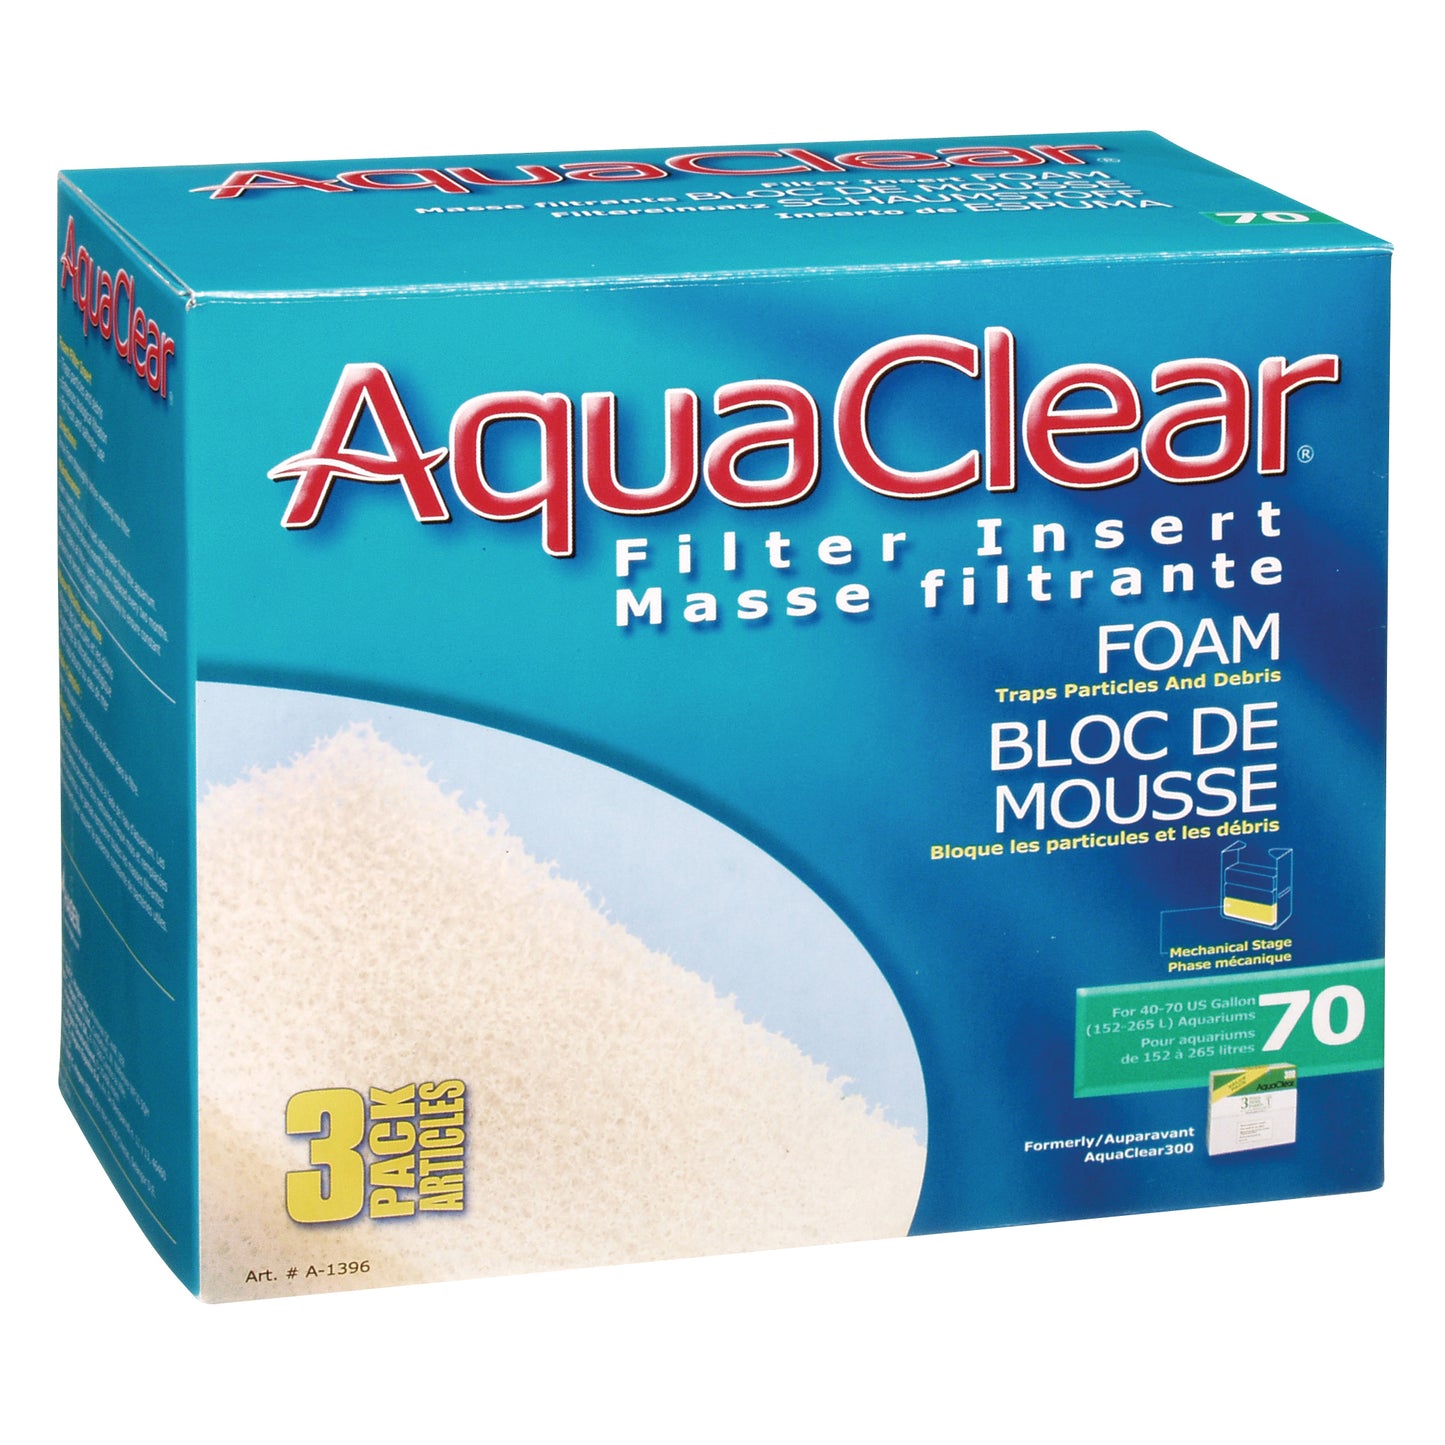 AquaClear 70 Foam Filter Insert 3-Pack